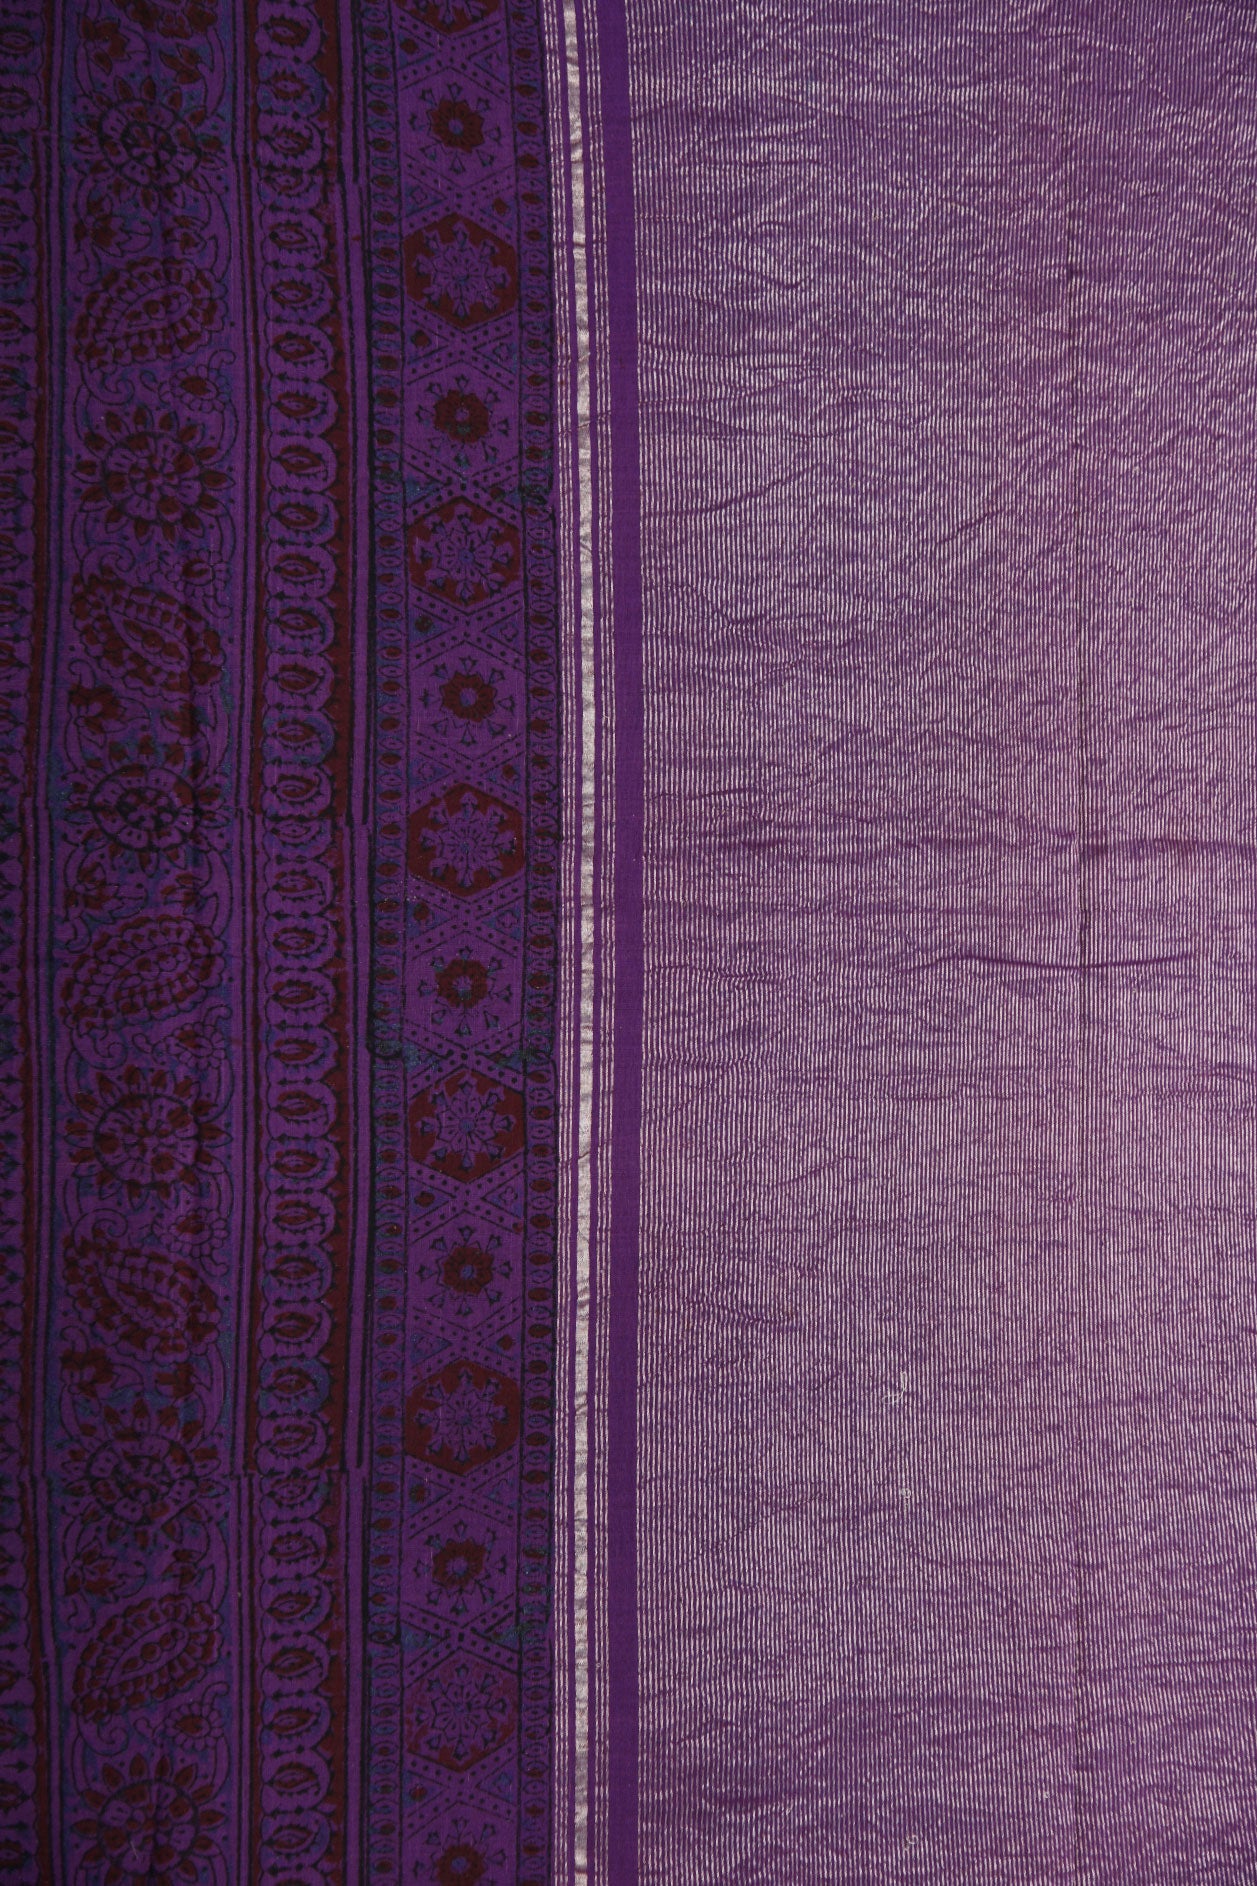 Zari Border With Floral Ajrakh Printed Violet Mangalagiri Cotton Saree